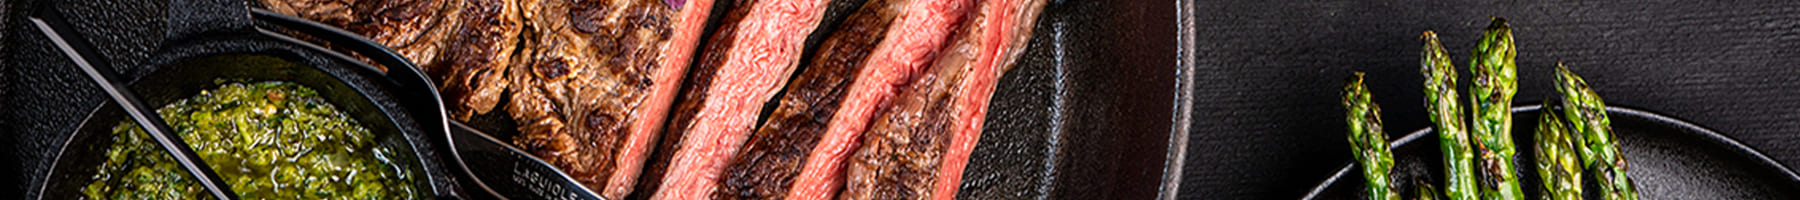 Steak and Roasts